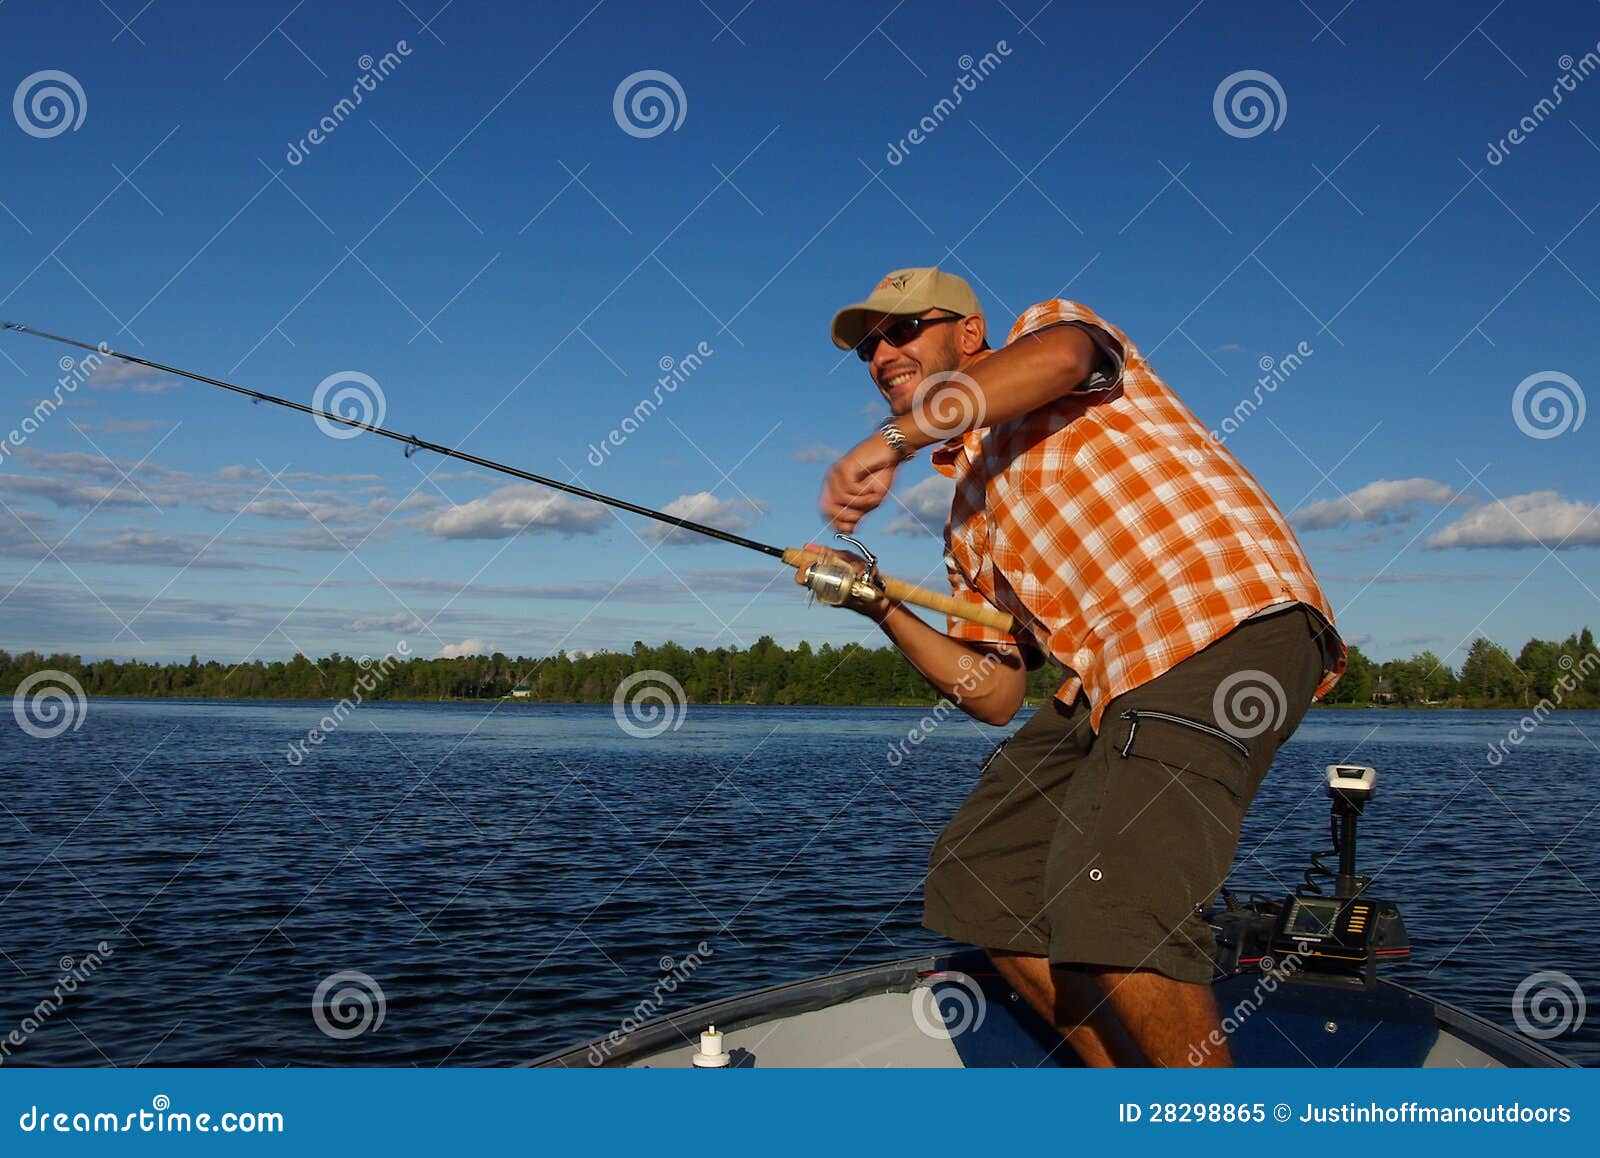 man fishing large mouth bass